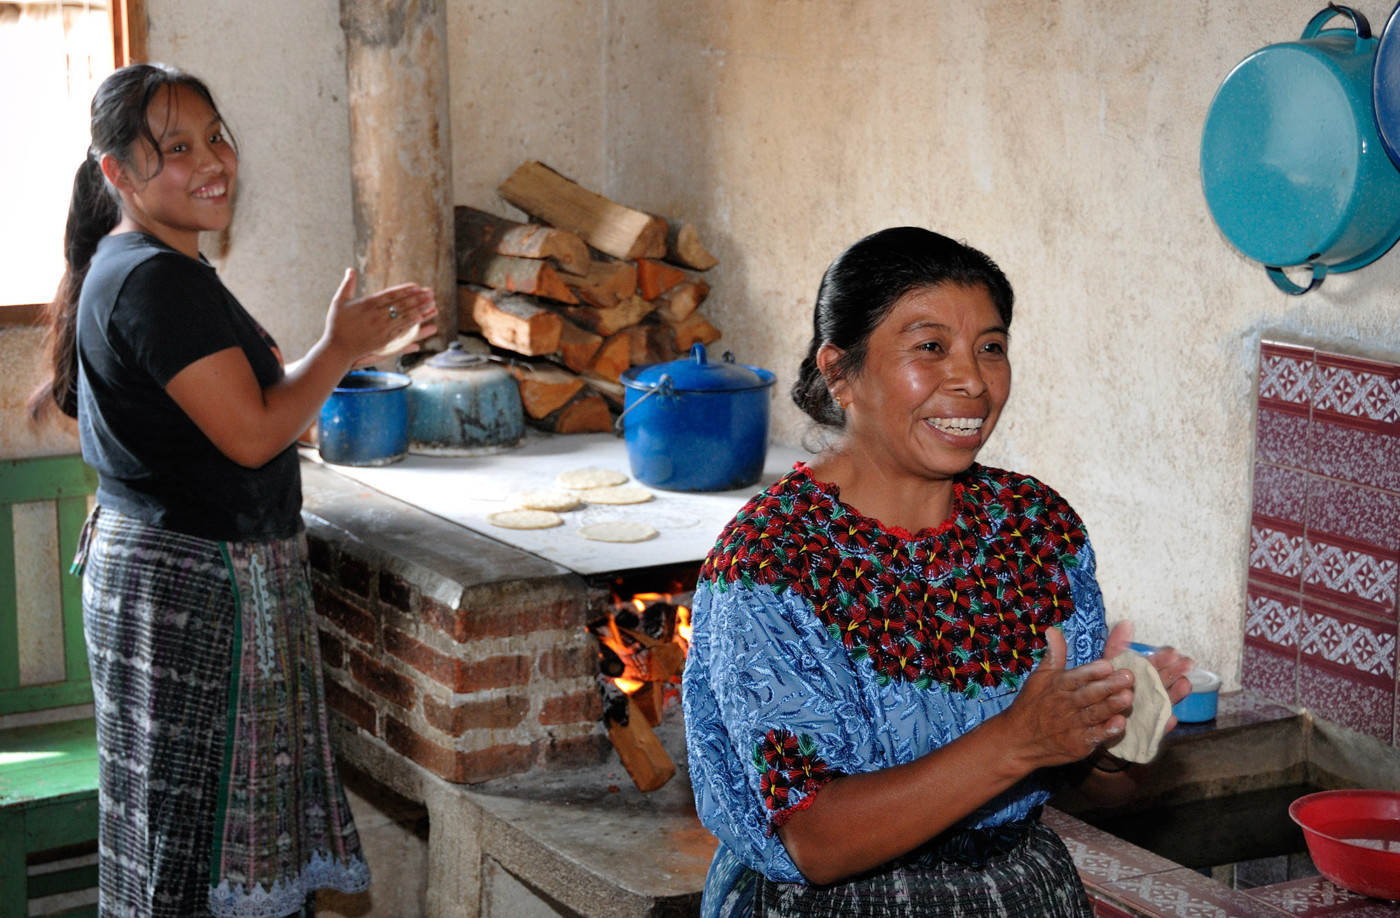 Friendship Bridge clients in Guatemala make tortillas to sell.